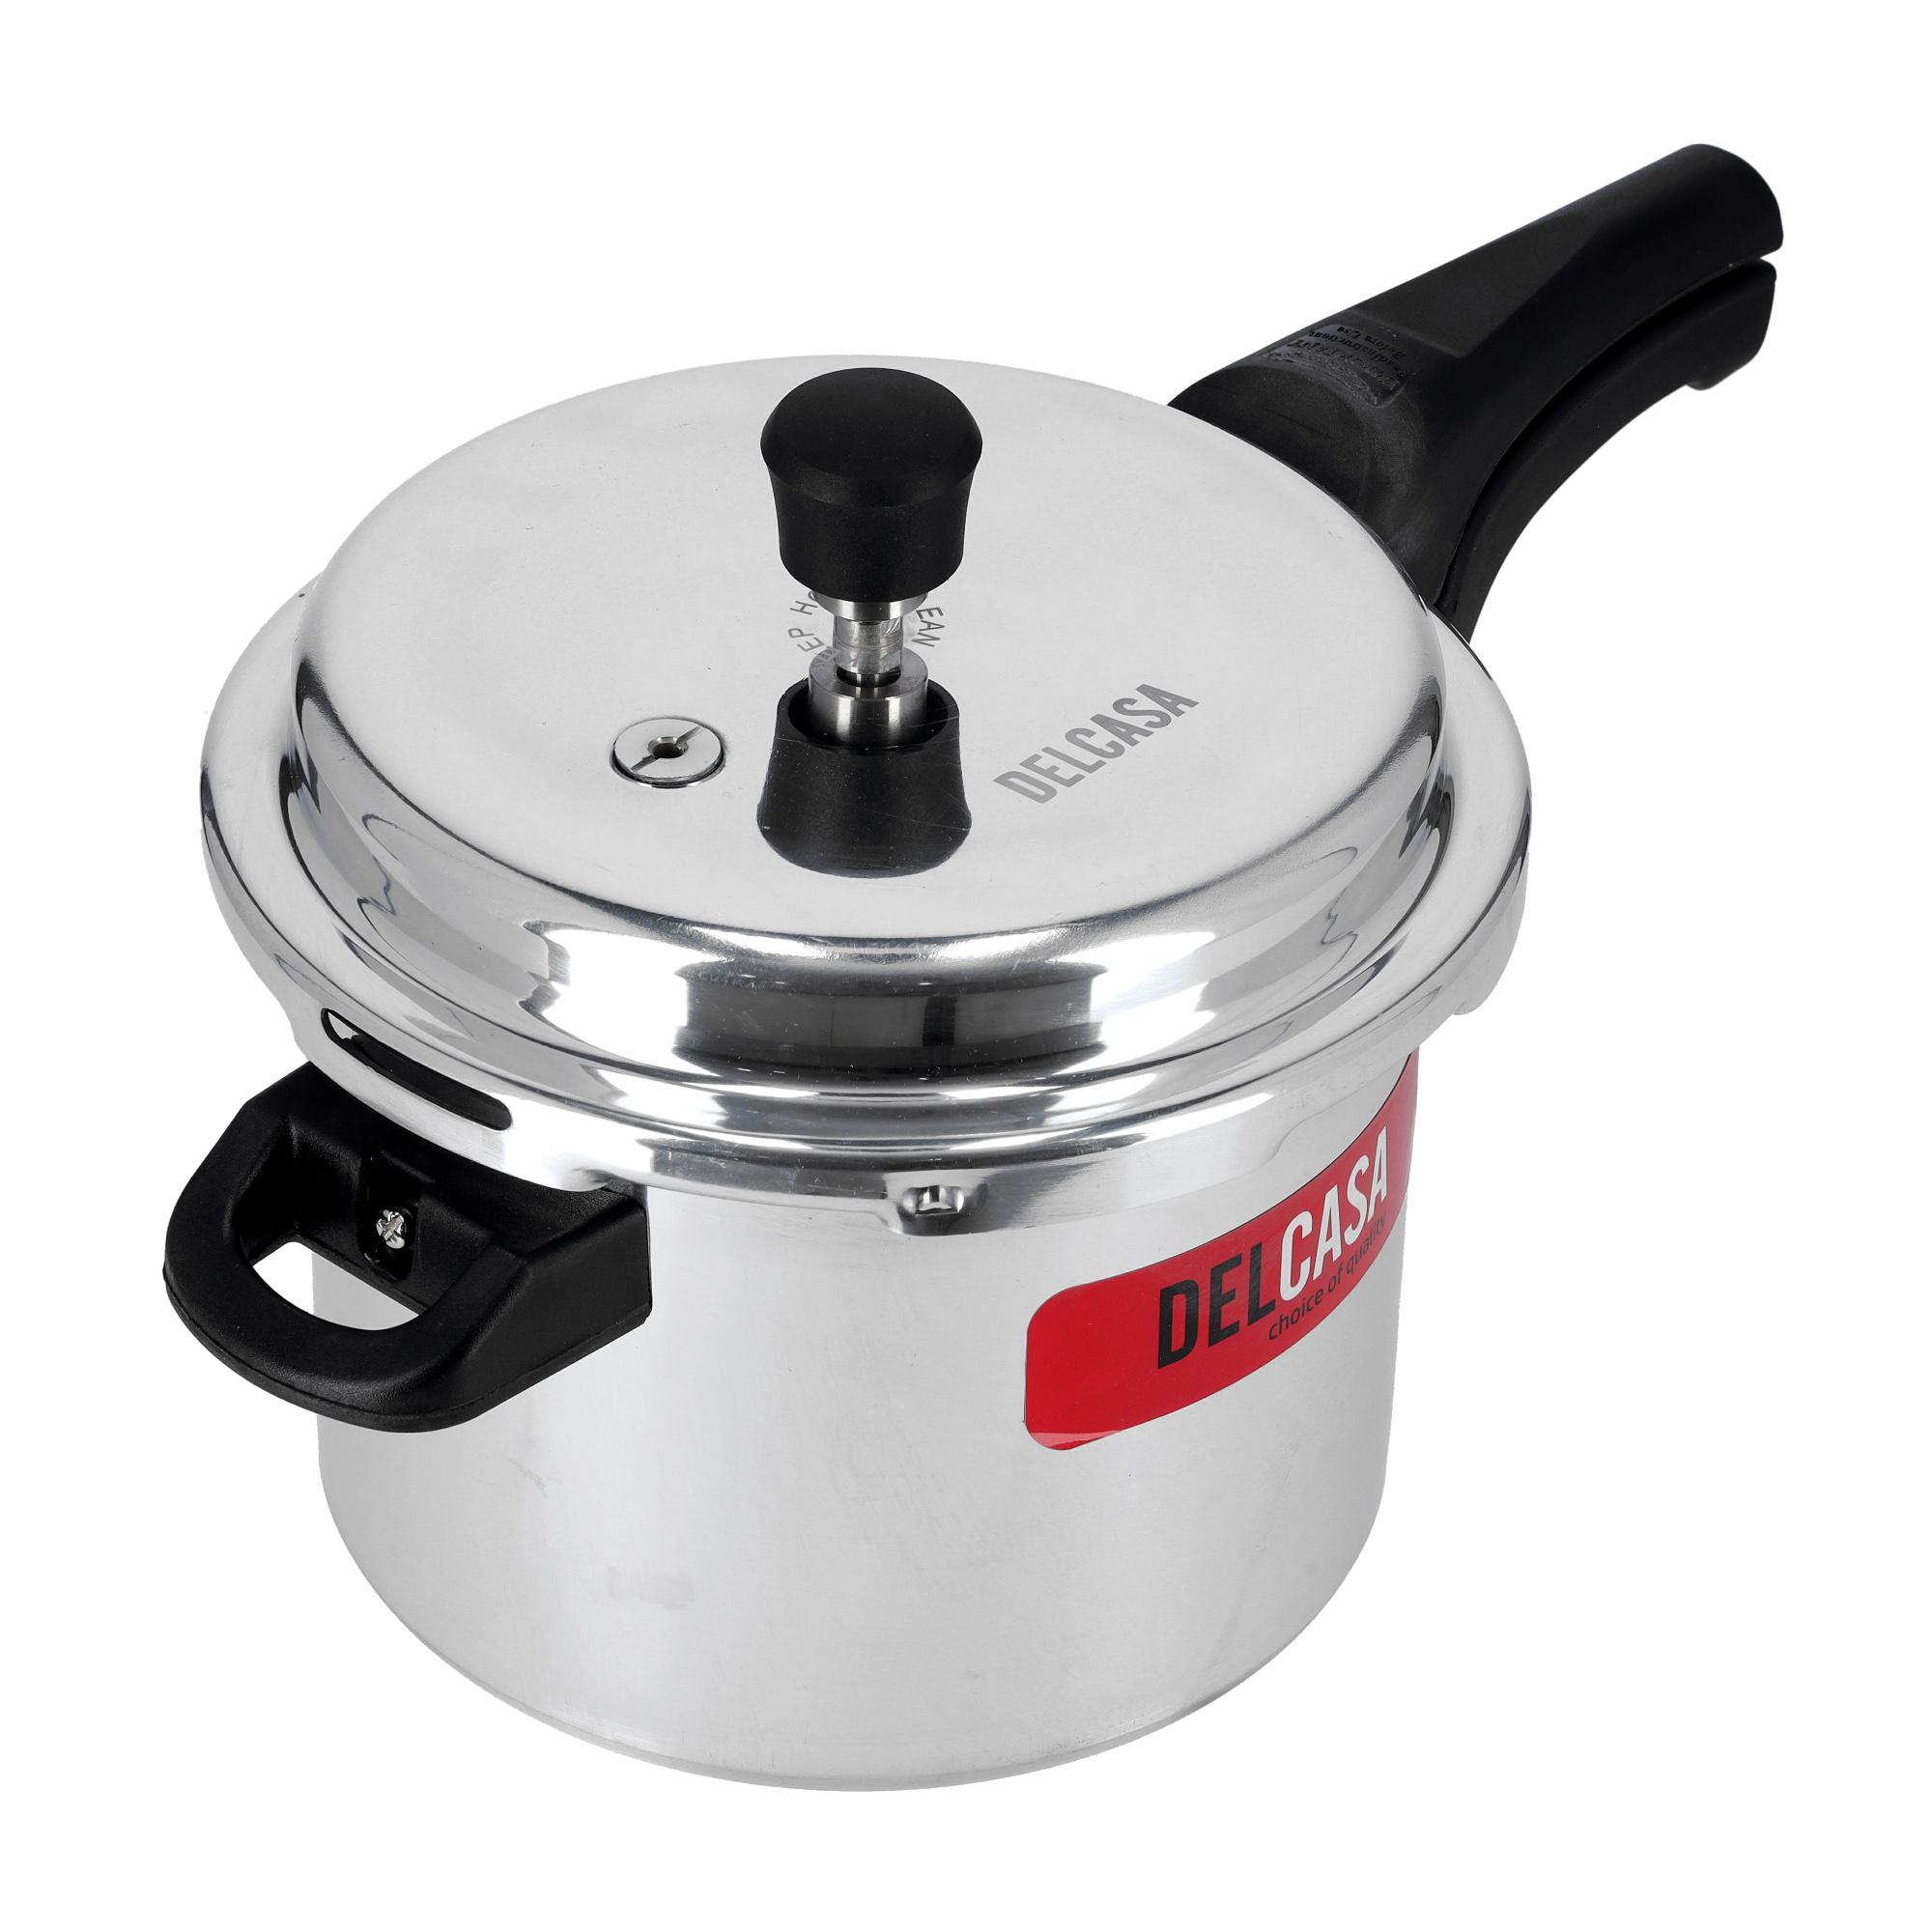 Delcasa 5L Aluminium Pressure Cooker - Lightweight & Durable Home Kitchen Pressure Cooker With Lid